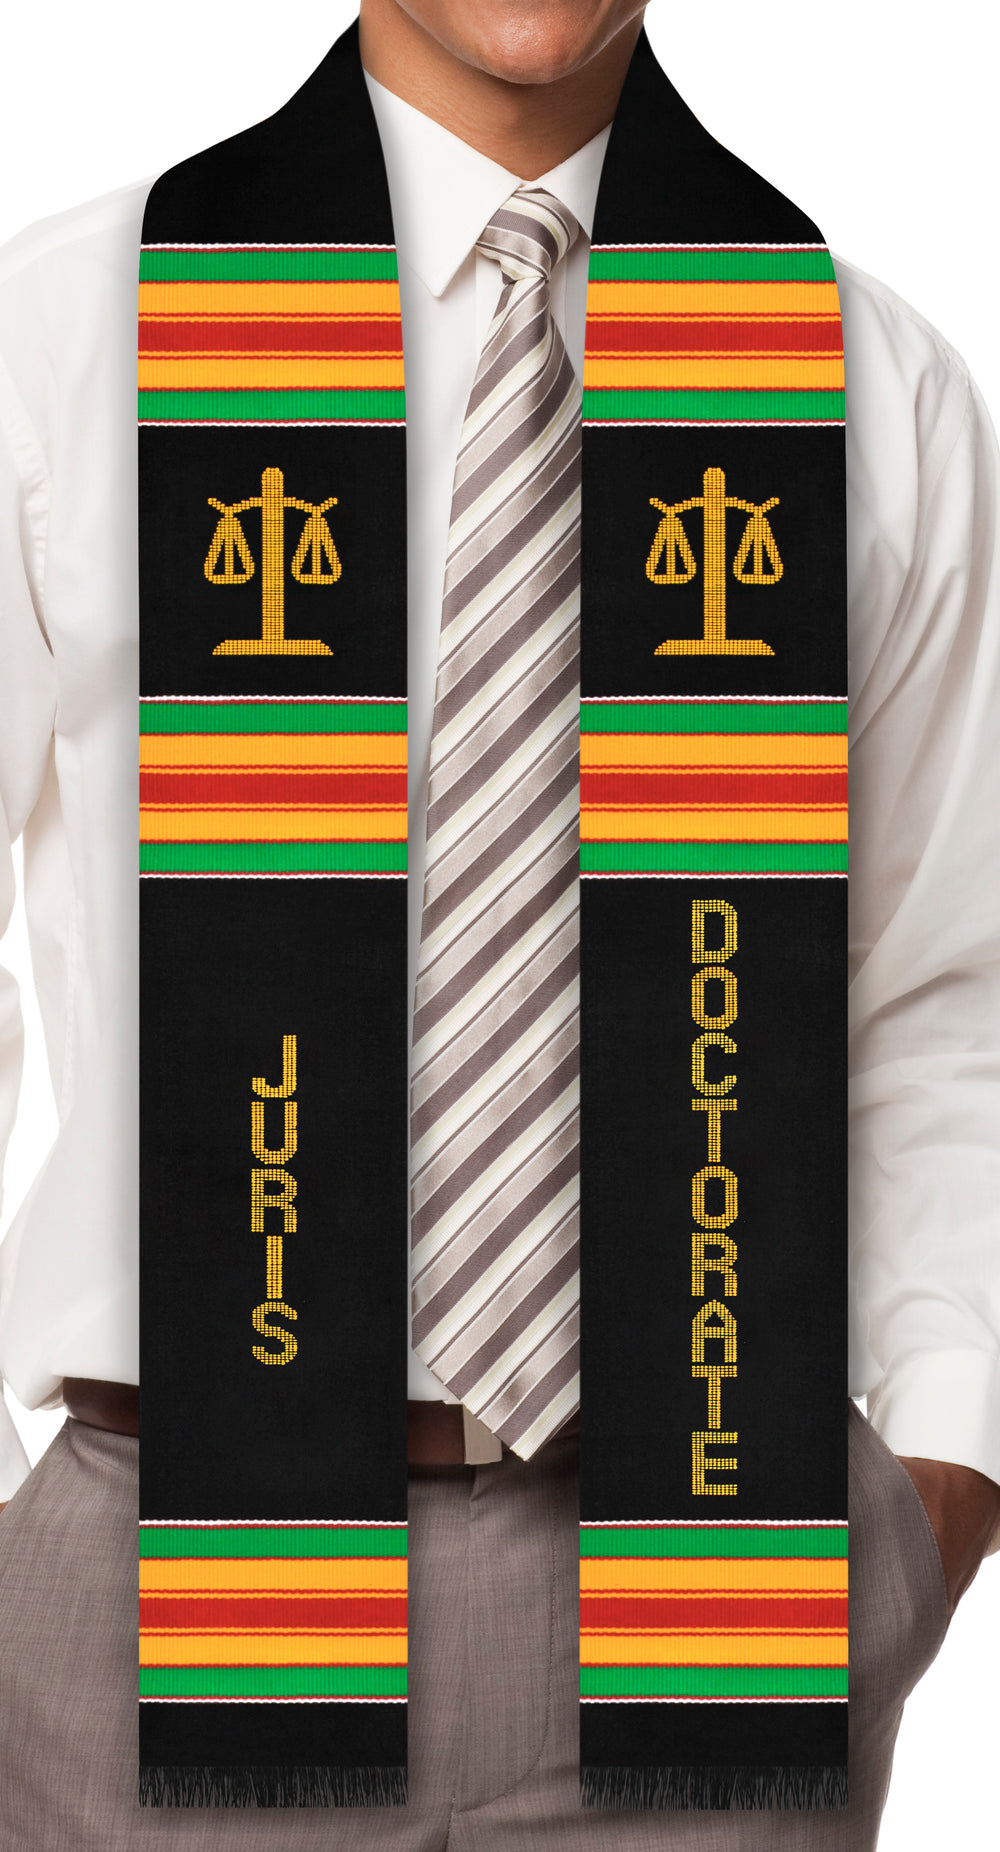 Juris Doctorate Authentic Handwoven Kente Cloth Graduation Stole